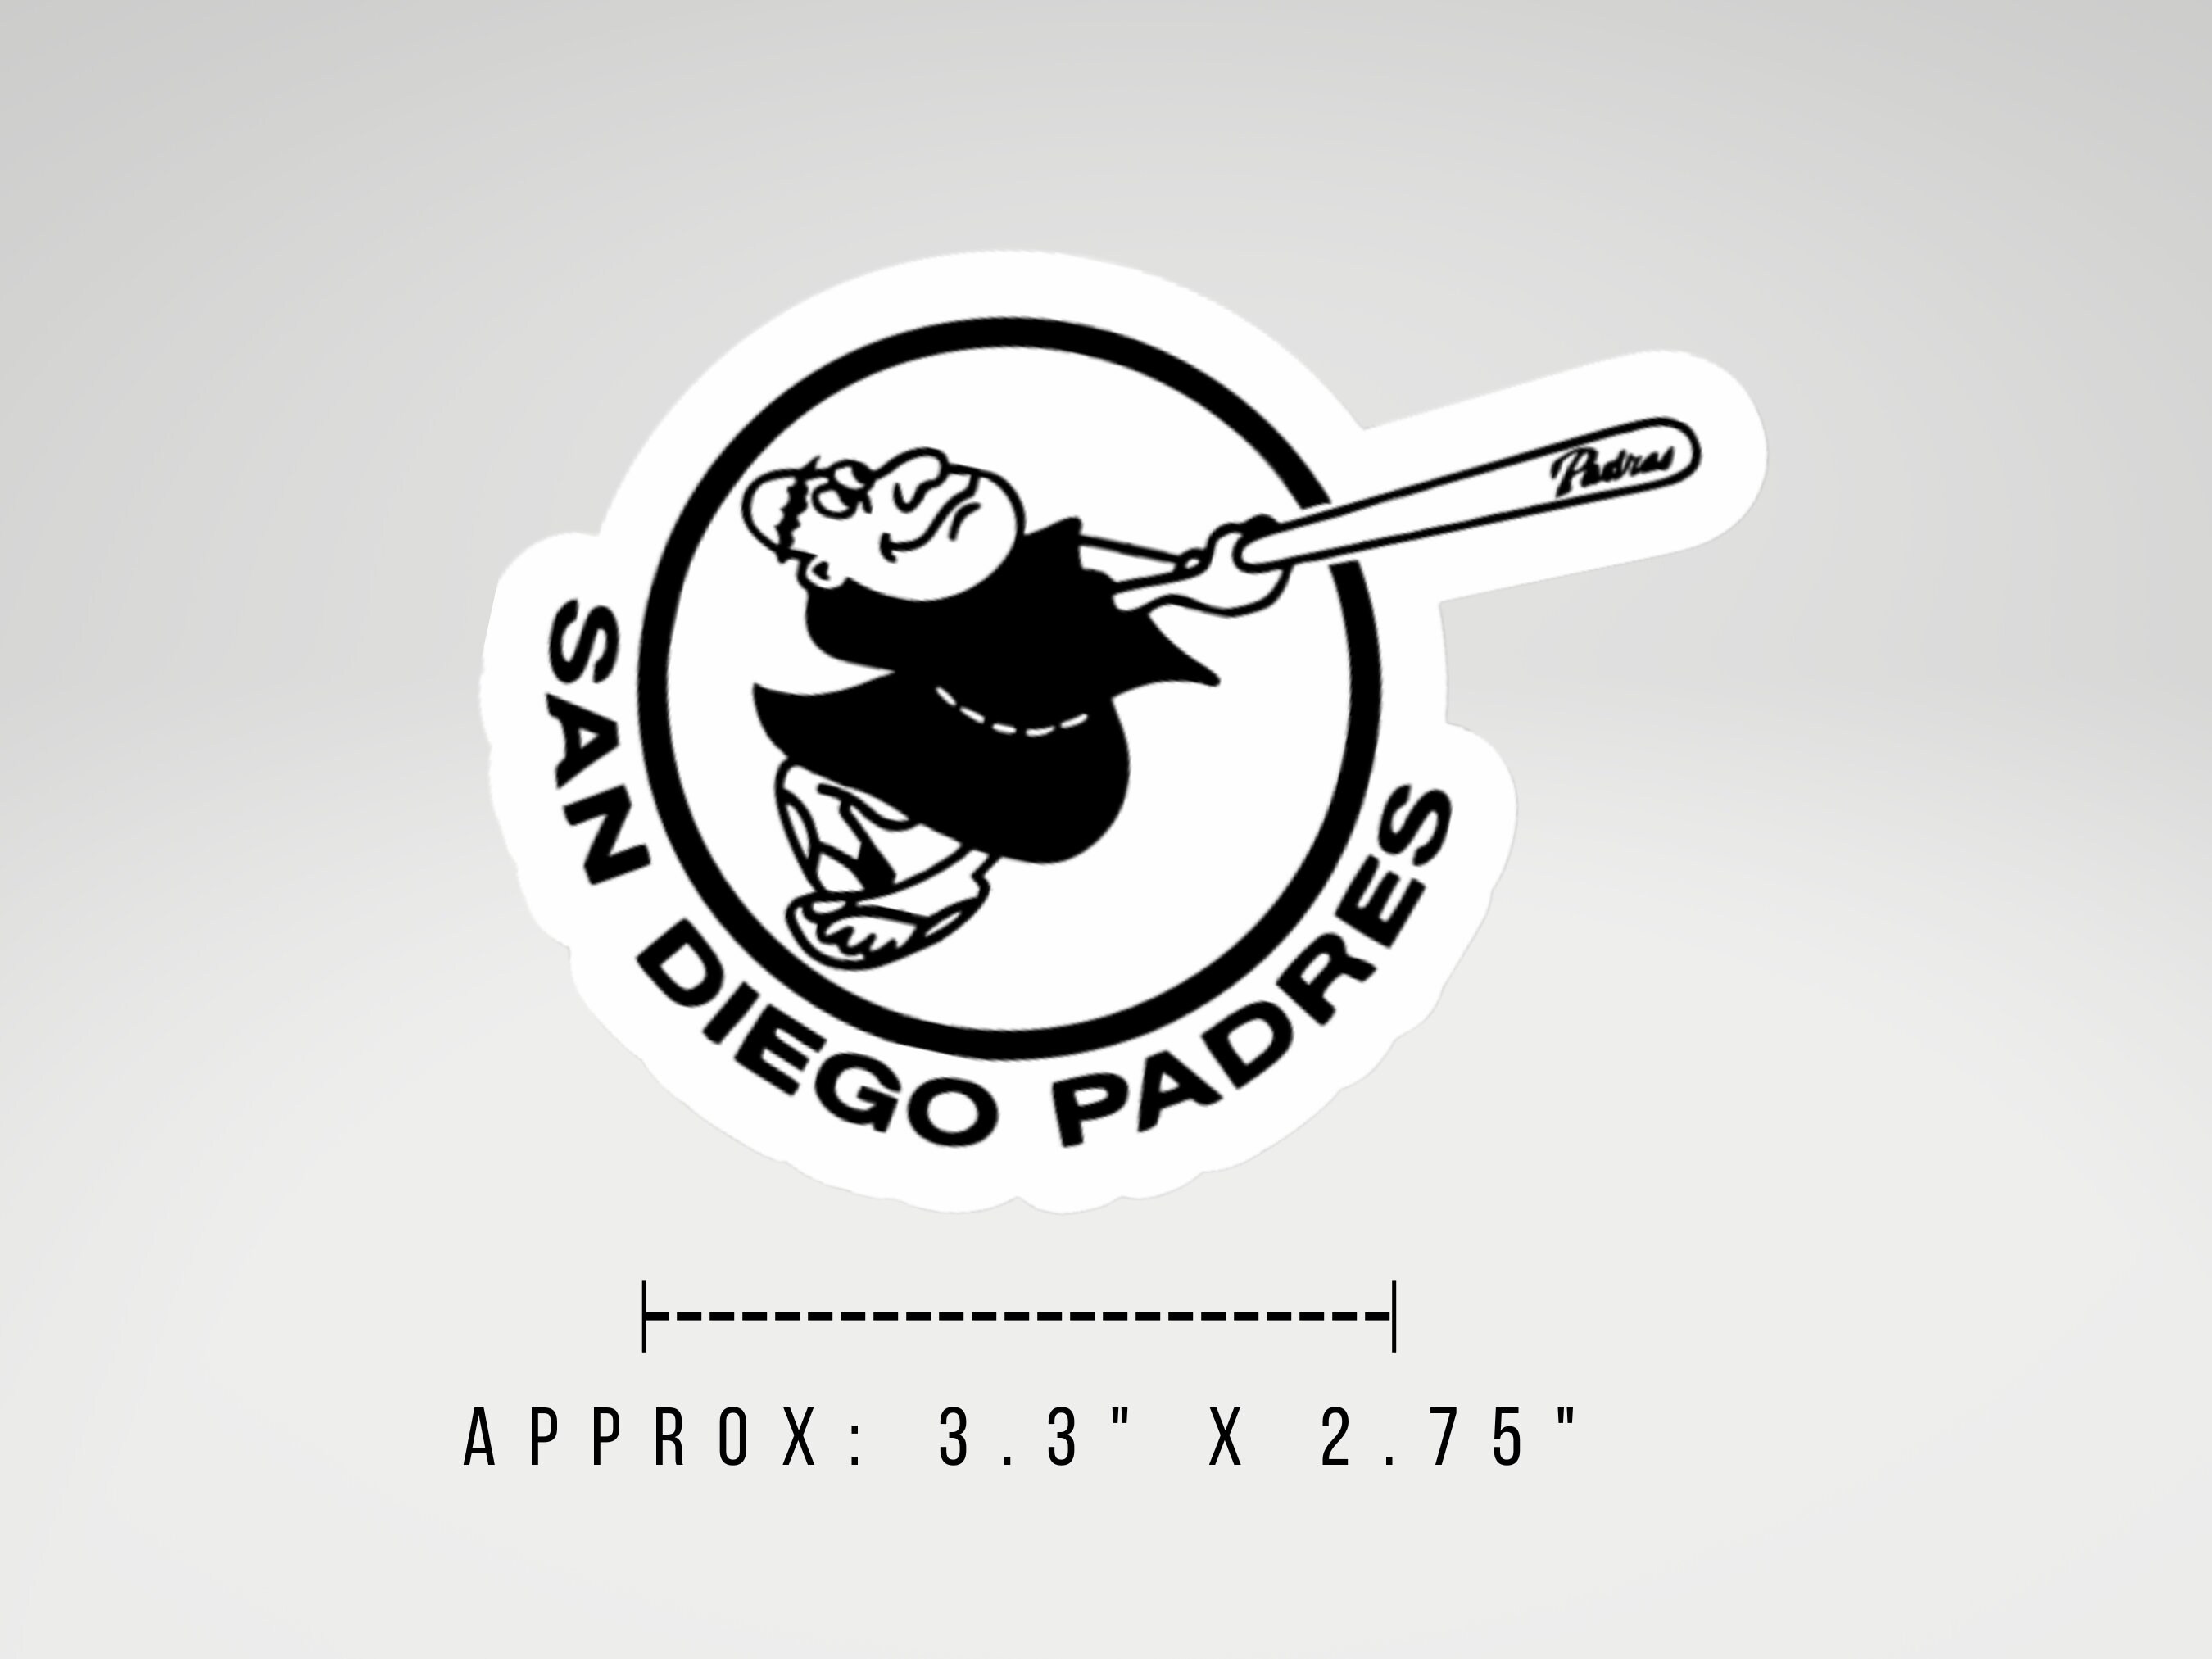 San Diego Swinging Friar Sticker 